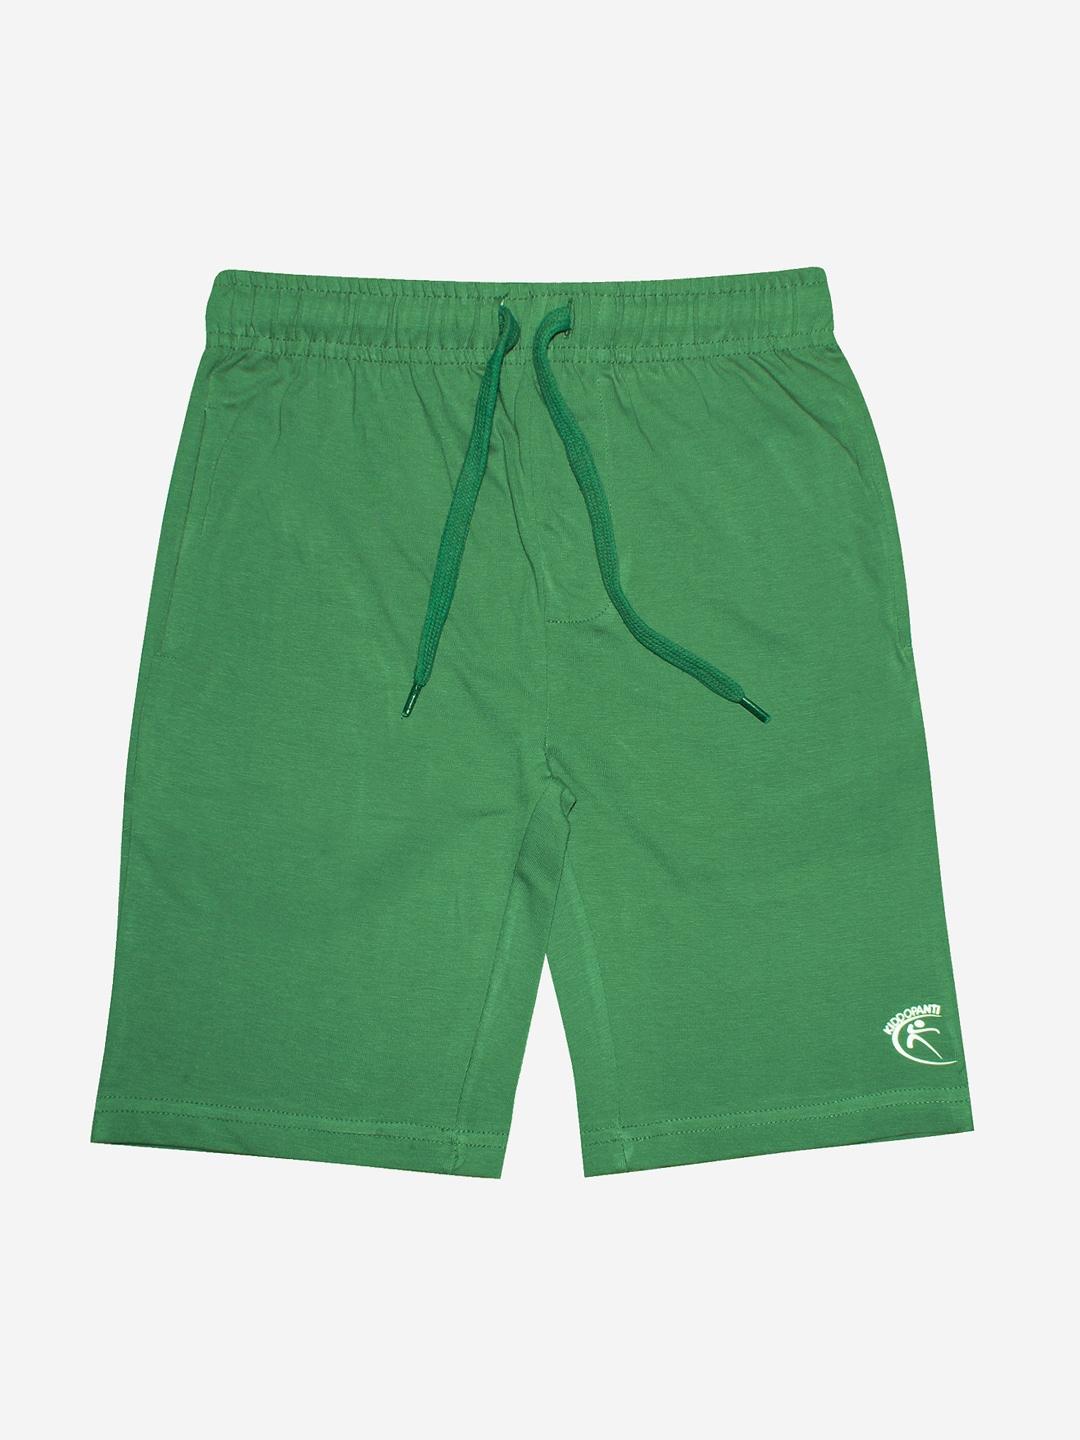 KiddoPanti Boys Green Regular Fit Cotton Shorts